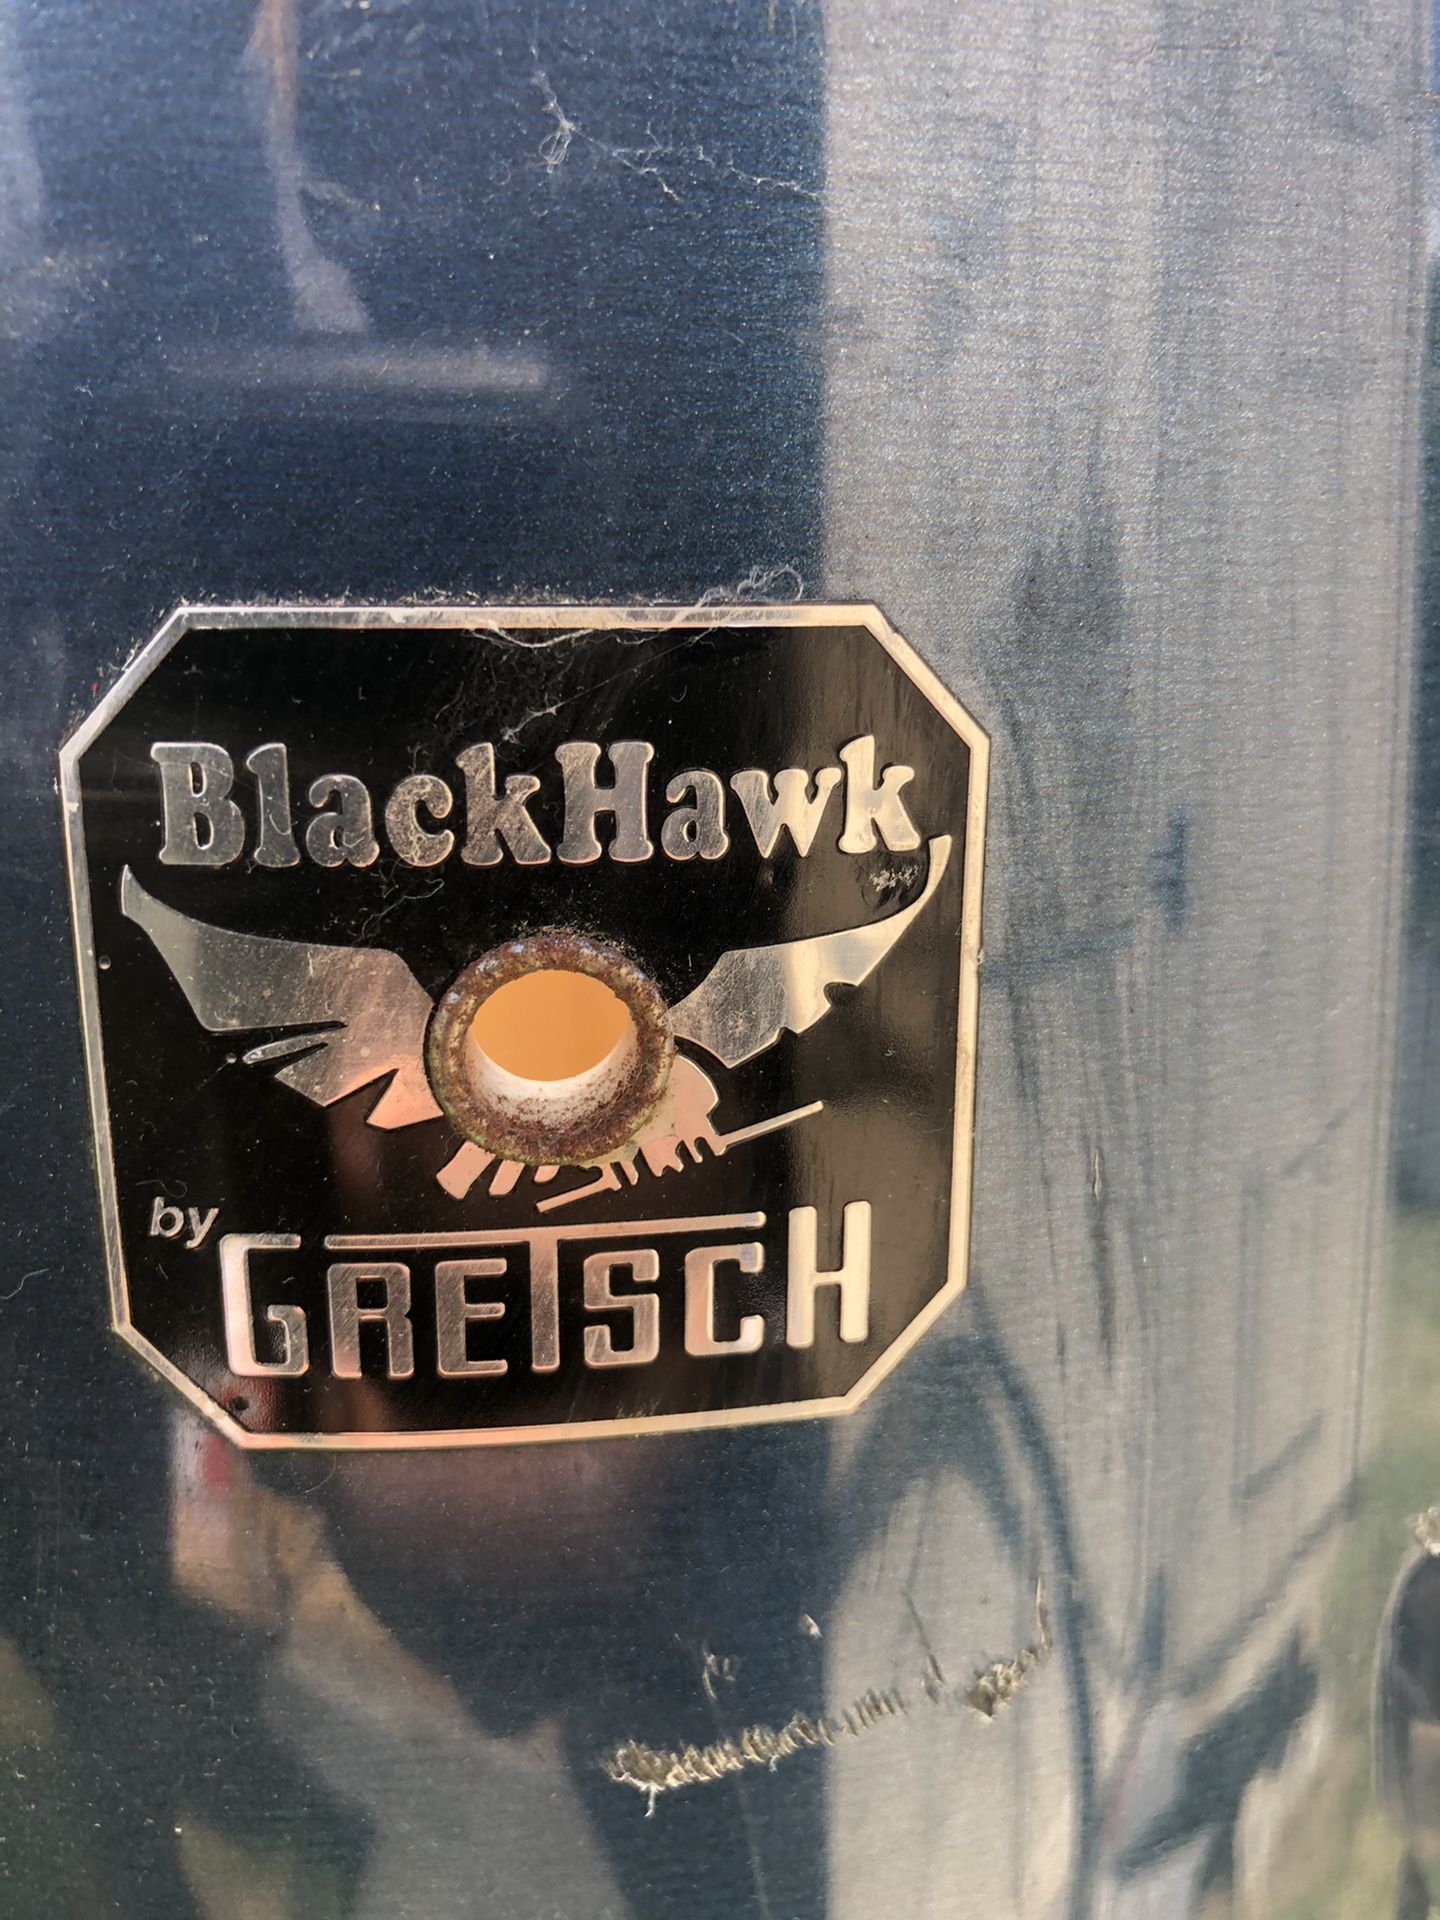 Gretsch Blackhawk 3pc Drums 